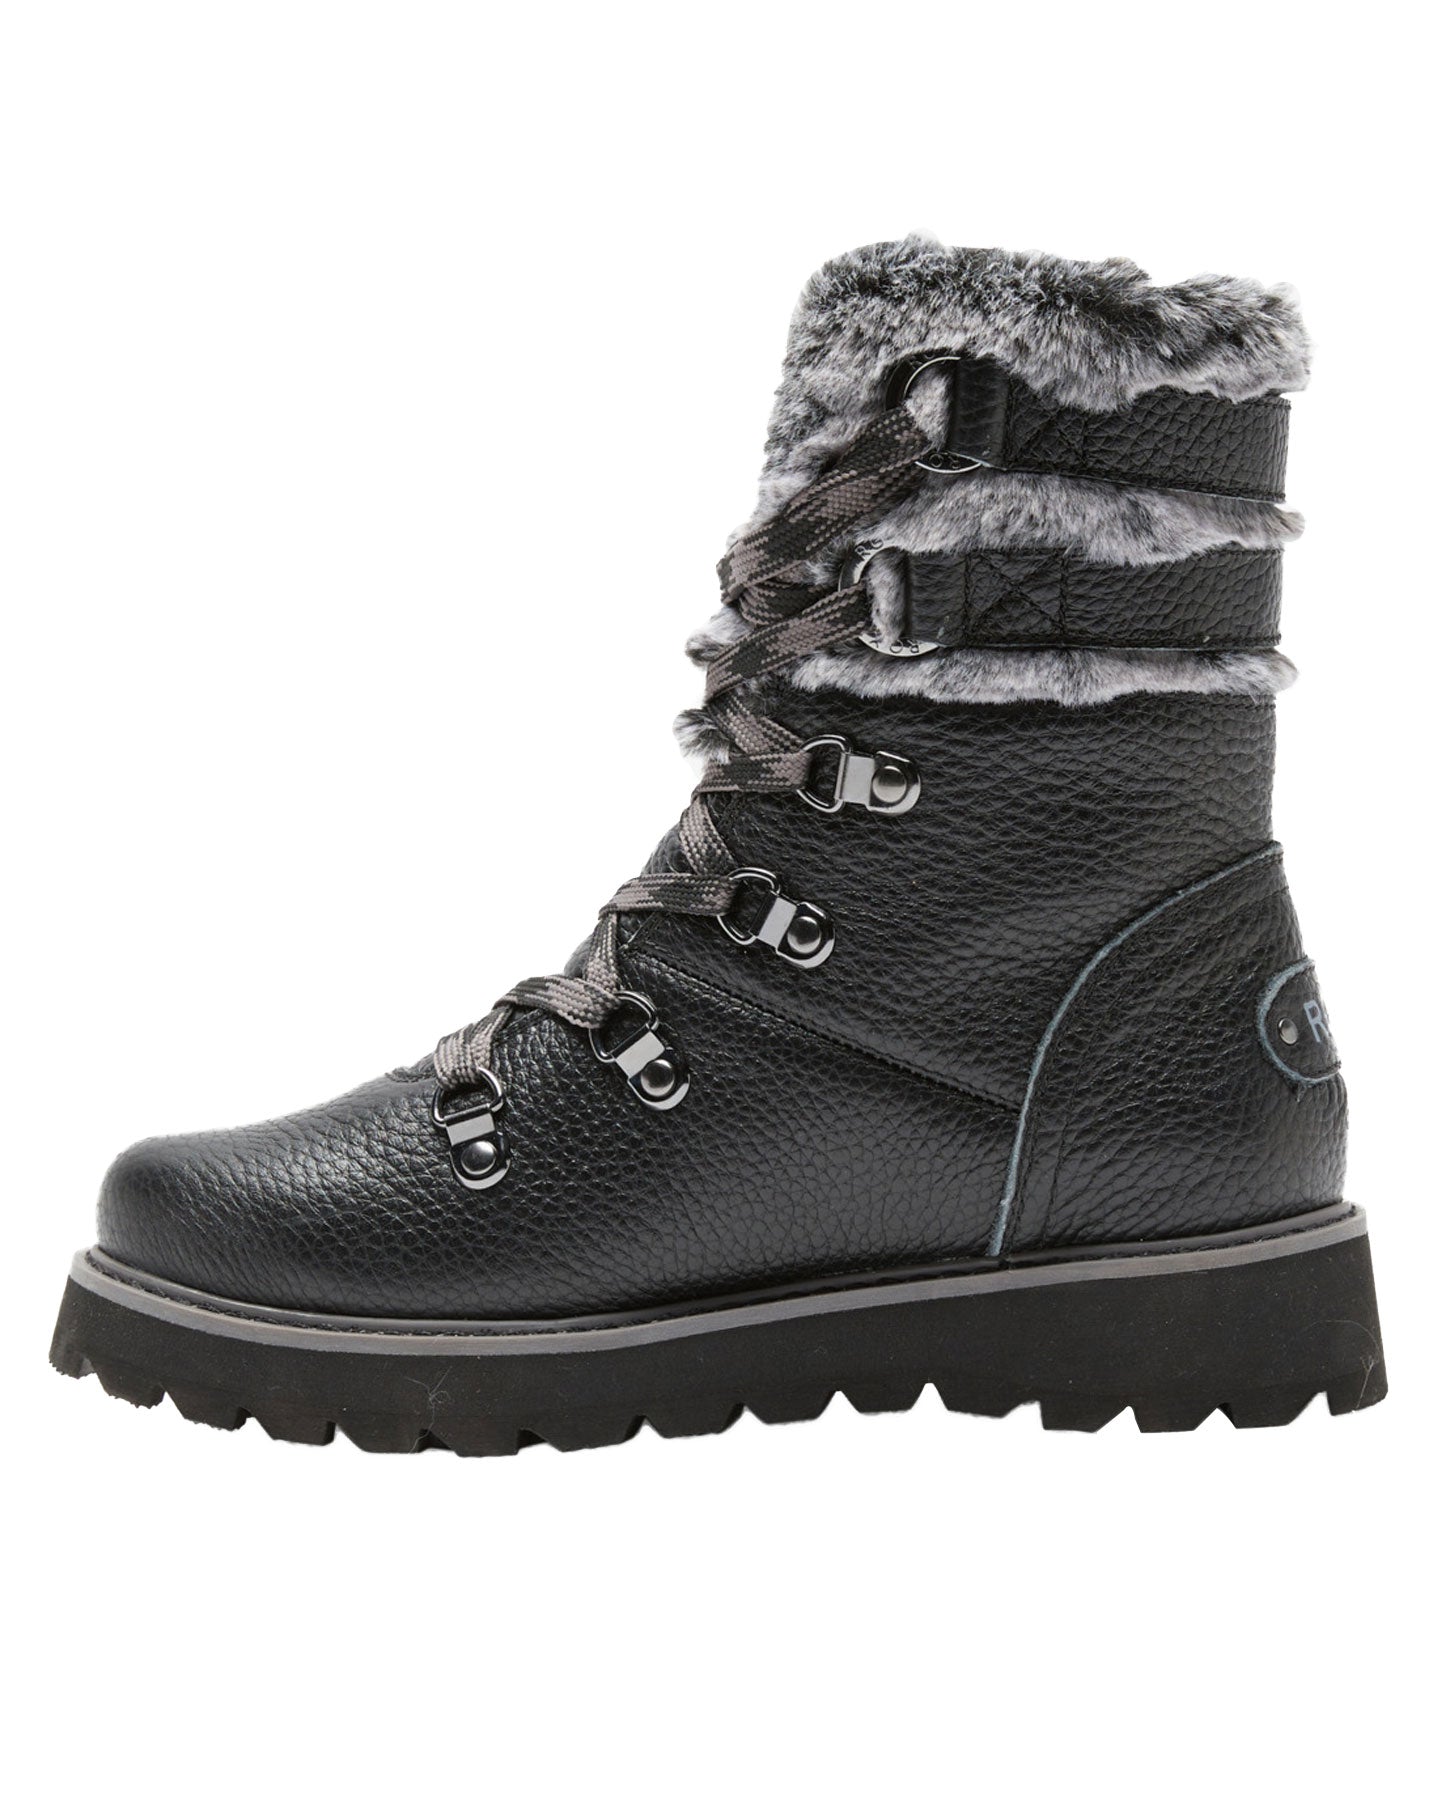 Roxy Women's Brandi III Winter Boots - Black Apres Boots - SnowSkiersWarehouse